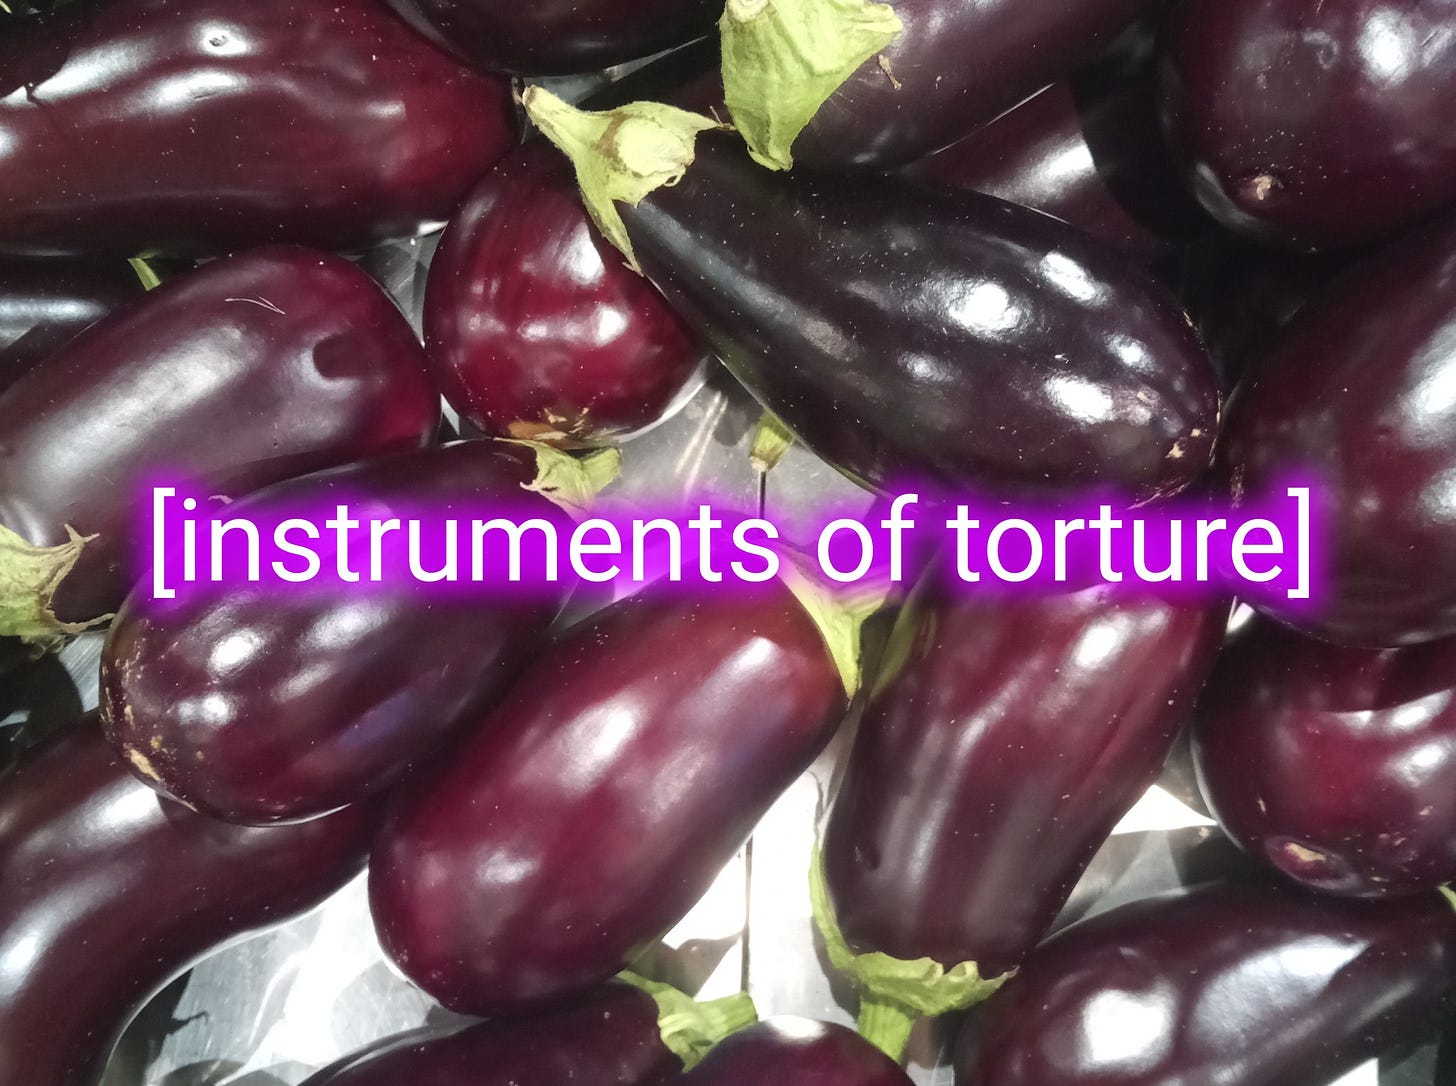 [meme] [image of eggplants]: "instruments of torture"